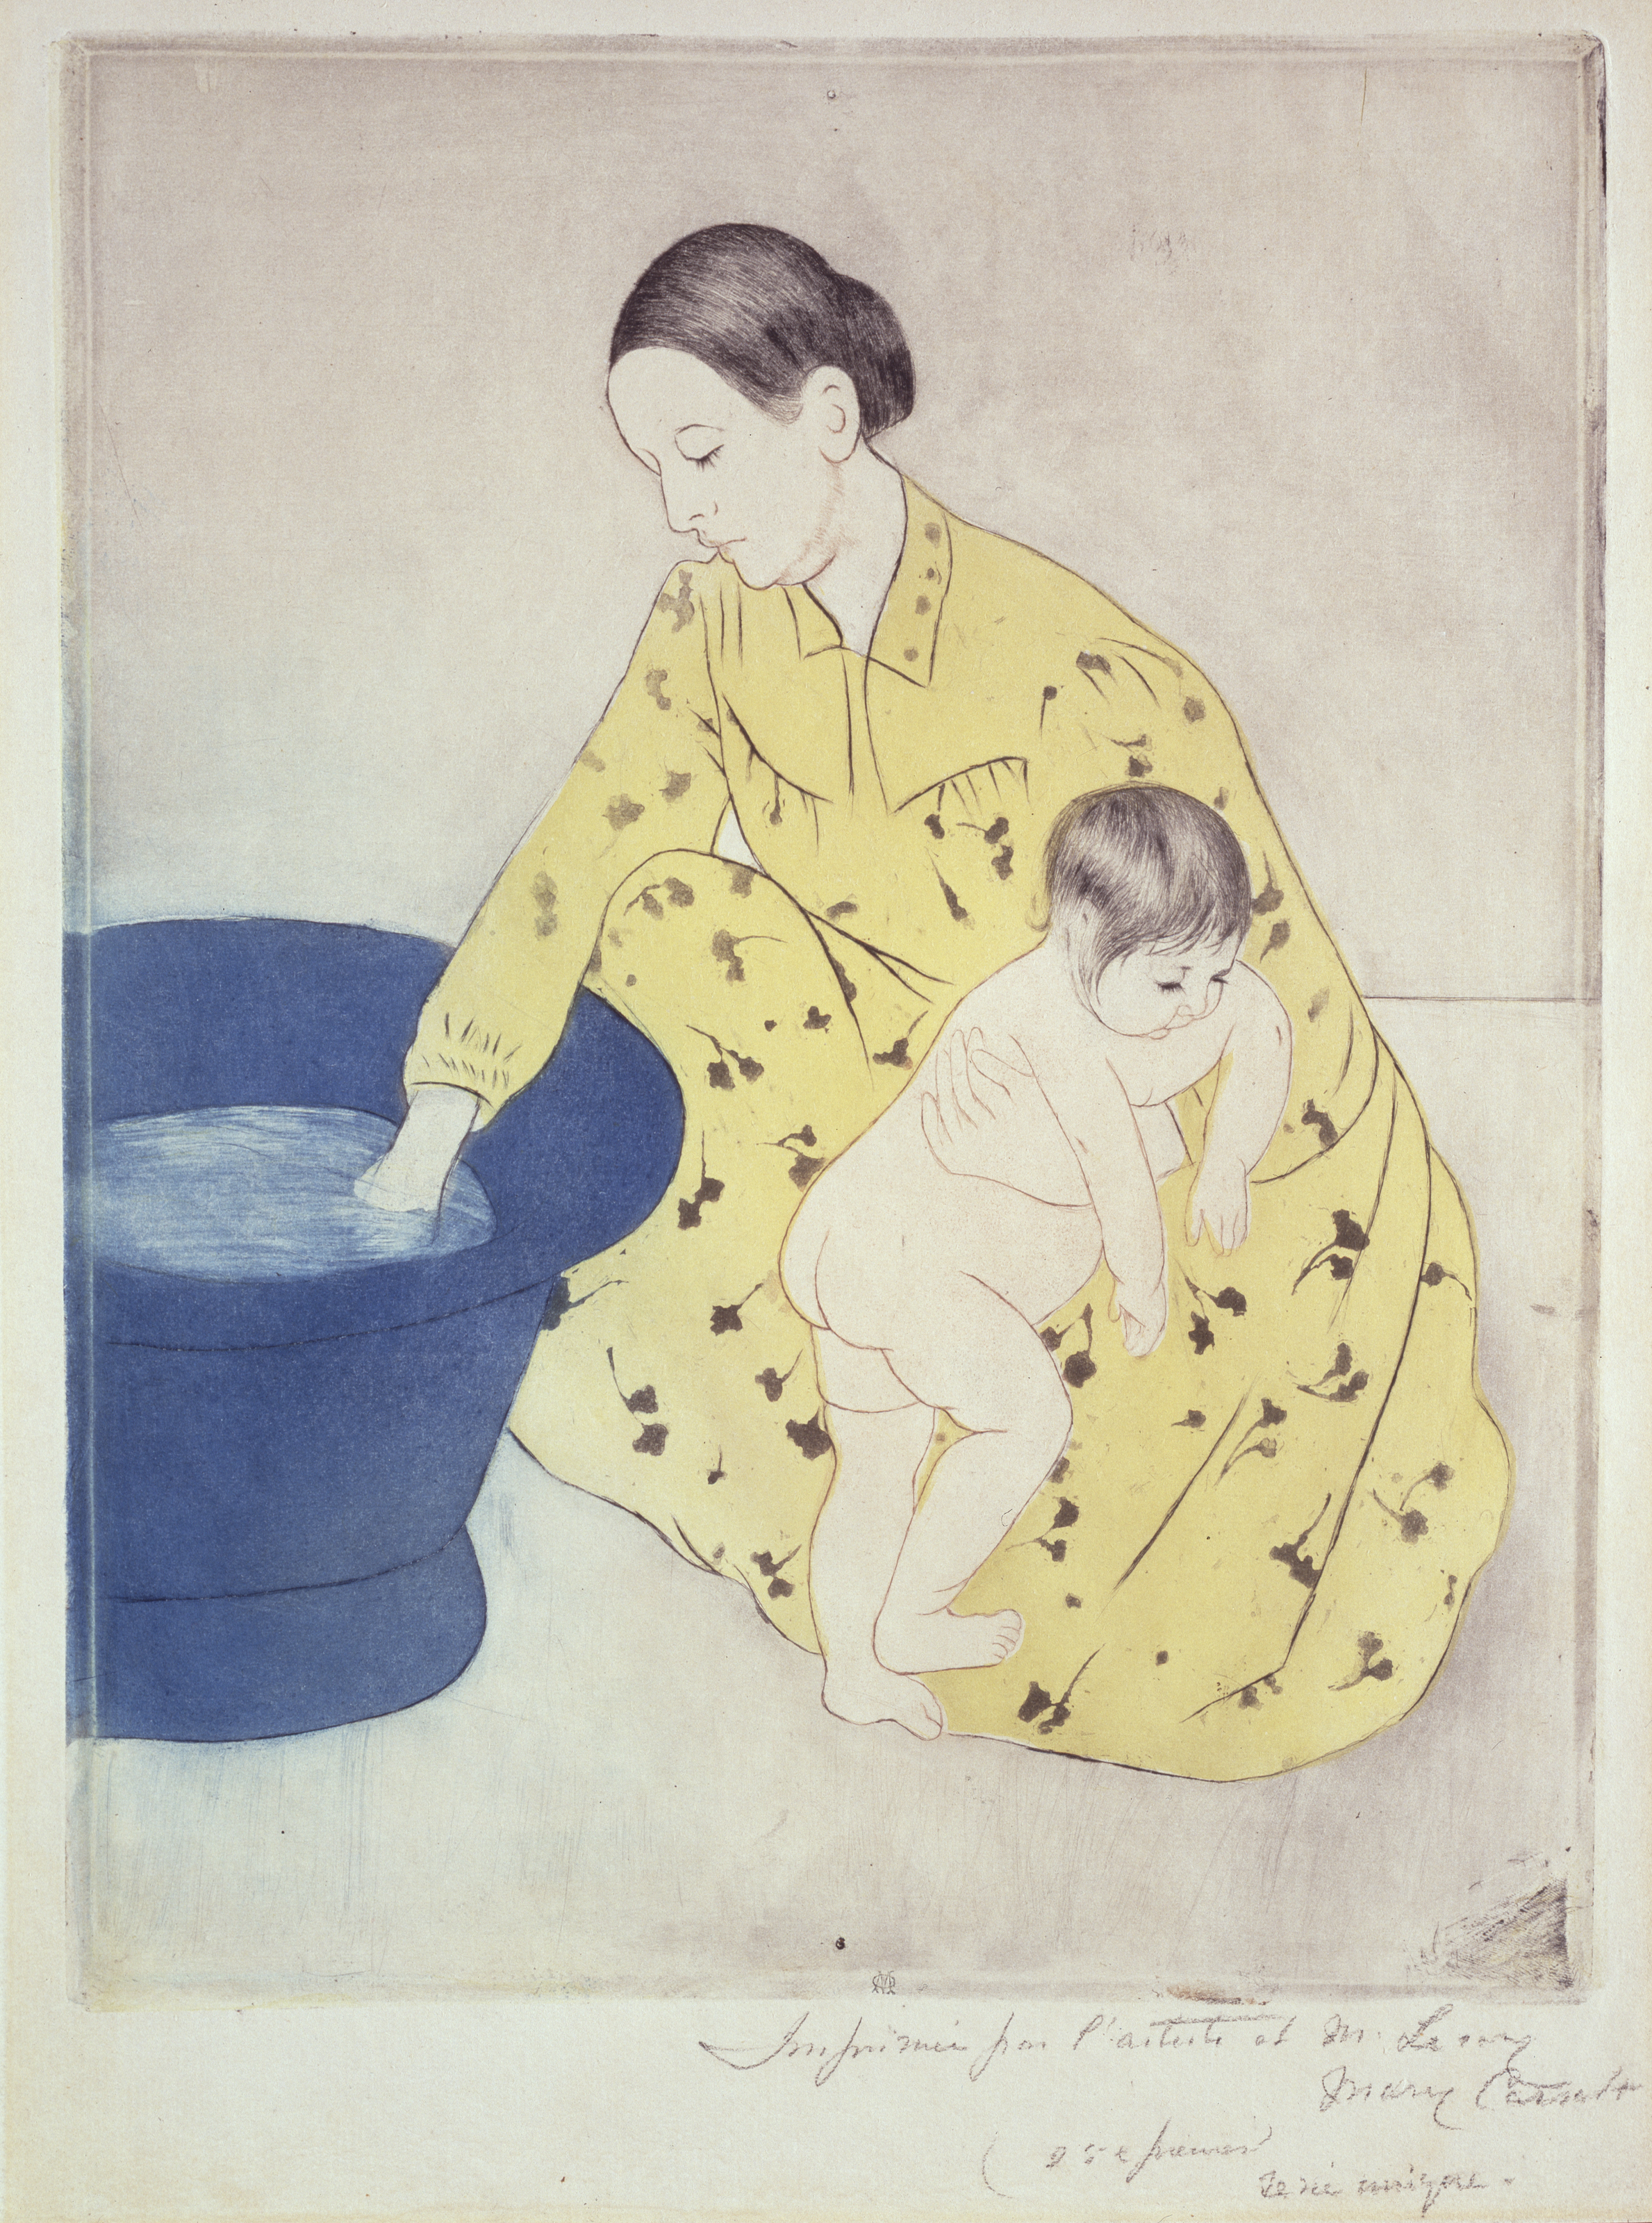 Kąpiel by Mary Cassatt - 1891/1891 - 9,625 × 12,375 in 